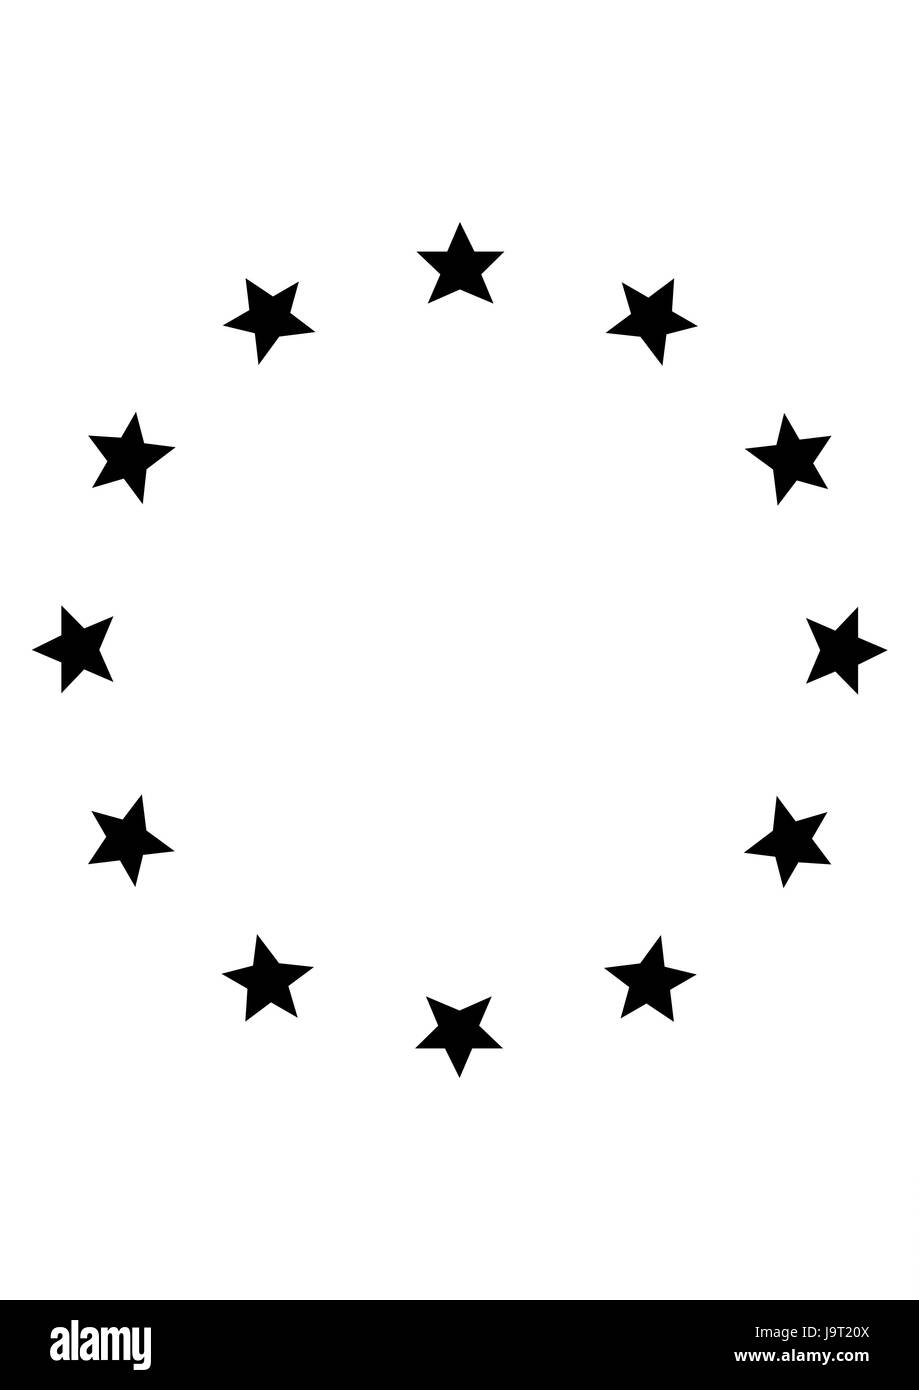 Computergrafik, Sterne, array, kreisförmig, Stern, Kreis, EU-Sternen, EU-Flagge, weiss-schwarz, europäische Flagge, Symbol, Europa, Europäische Union, EU, Europäische Gemeinschaft, Objektfotografie, Freis Platte Stockfoto